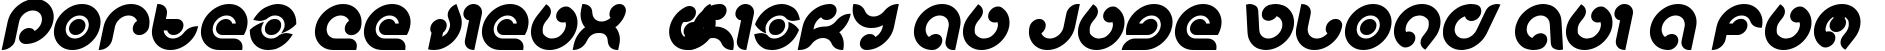 Пример написания шрифтом KIOSHIMA Bold Italic текста на французском